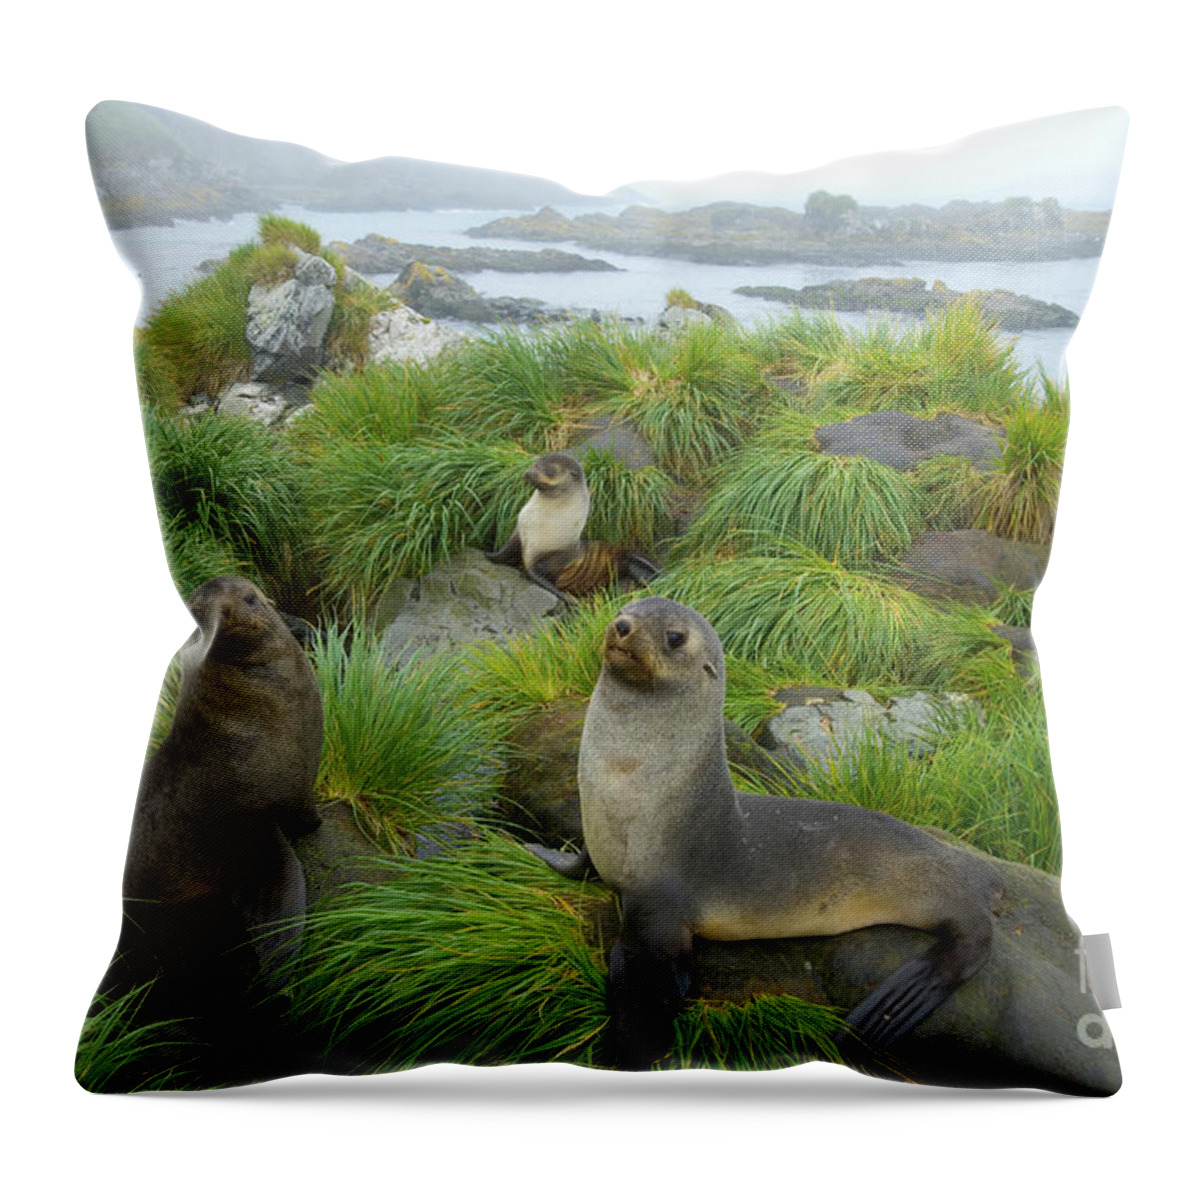 00345376 Throw Pillow featuring the photograph Three Antarctic Fur Seals by Yva Momatiuk John Eastcott